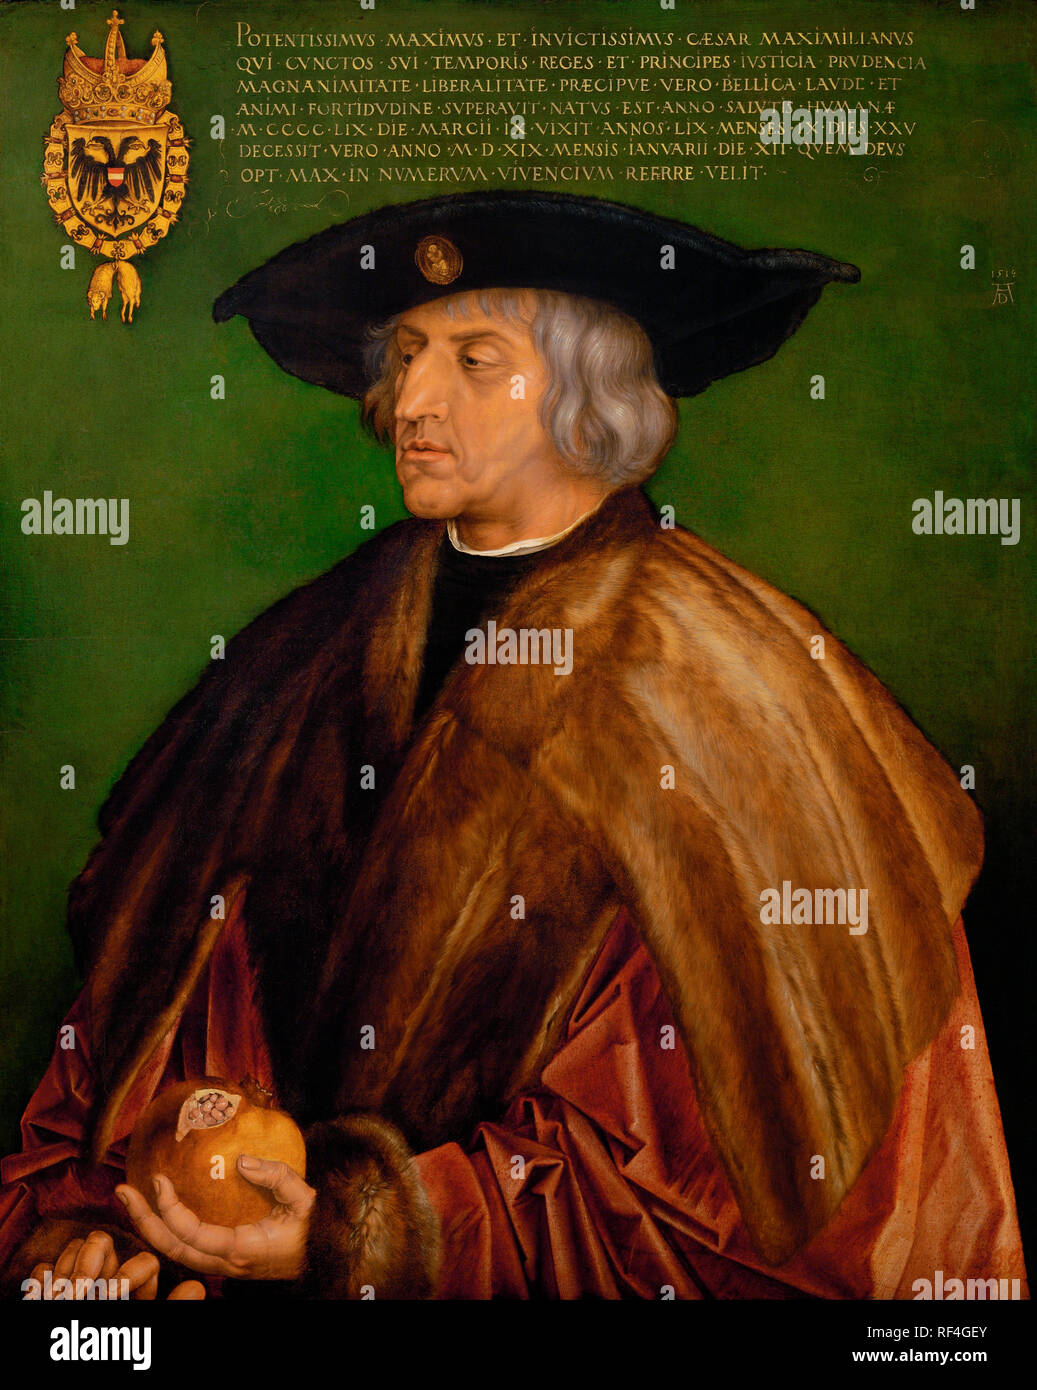 Portrait of Maximilian I - Holy Roman Emperor - Albrecht Dürer Stock Photo